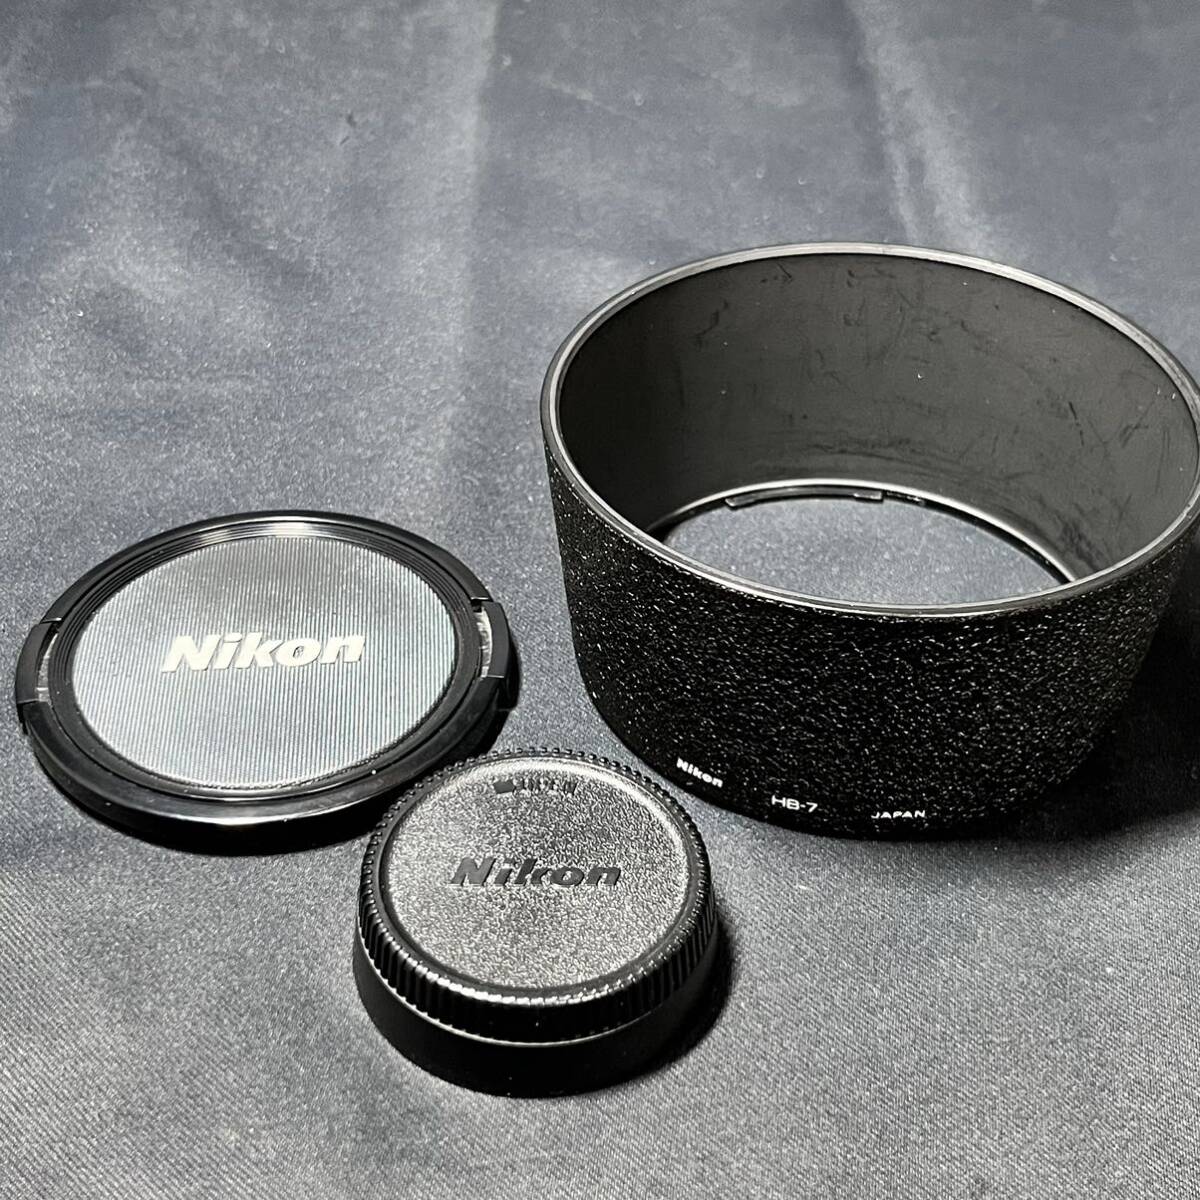 Nikon ニコン ED AF NIKKOR 80-200mm 1:2.8 D カメラレンズ/Nikon HB-7 レンズフード レンズキャップ付き 美品の画像10